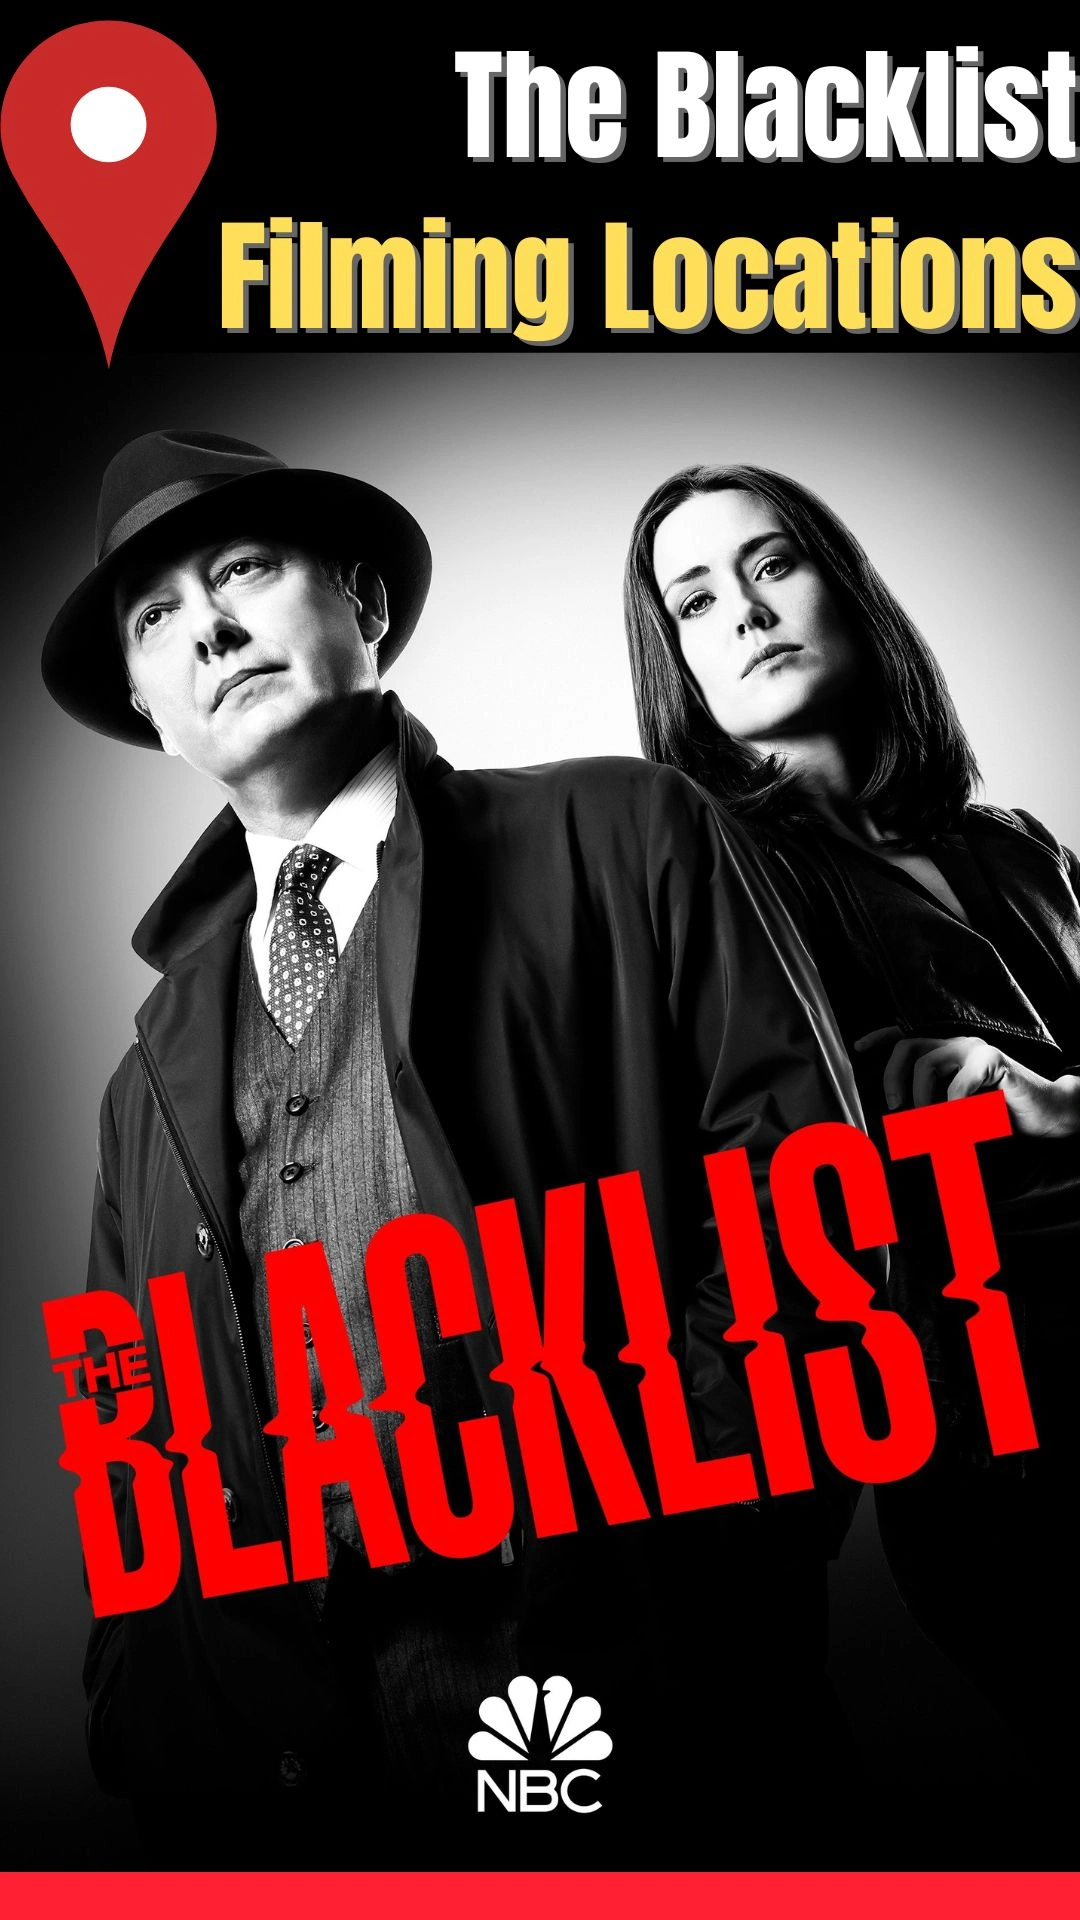 The Blacklist Filming Locations